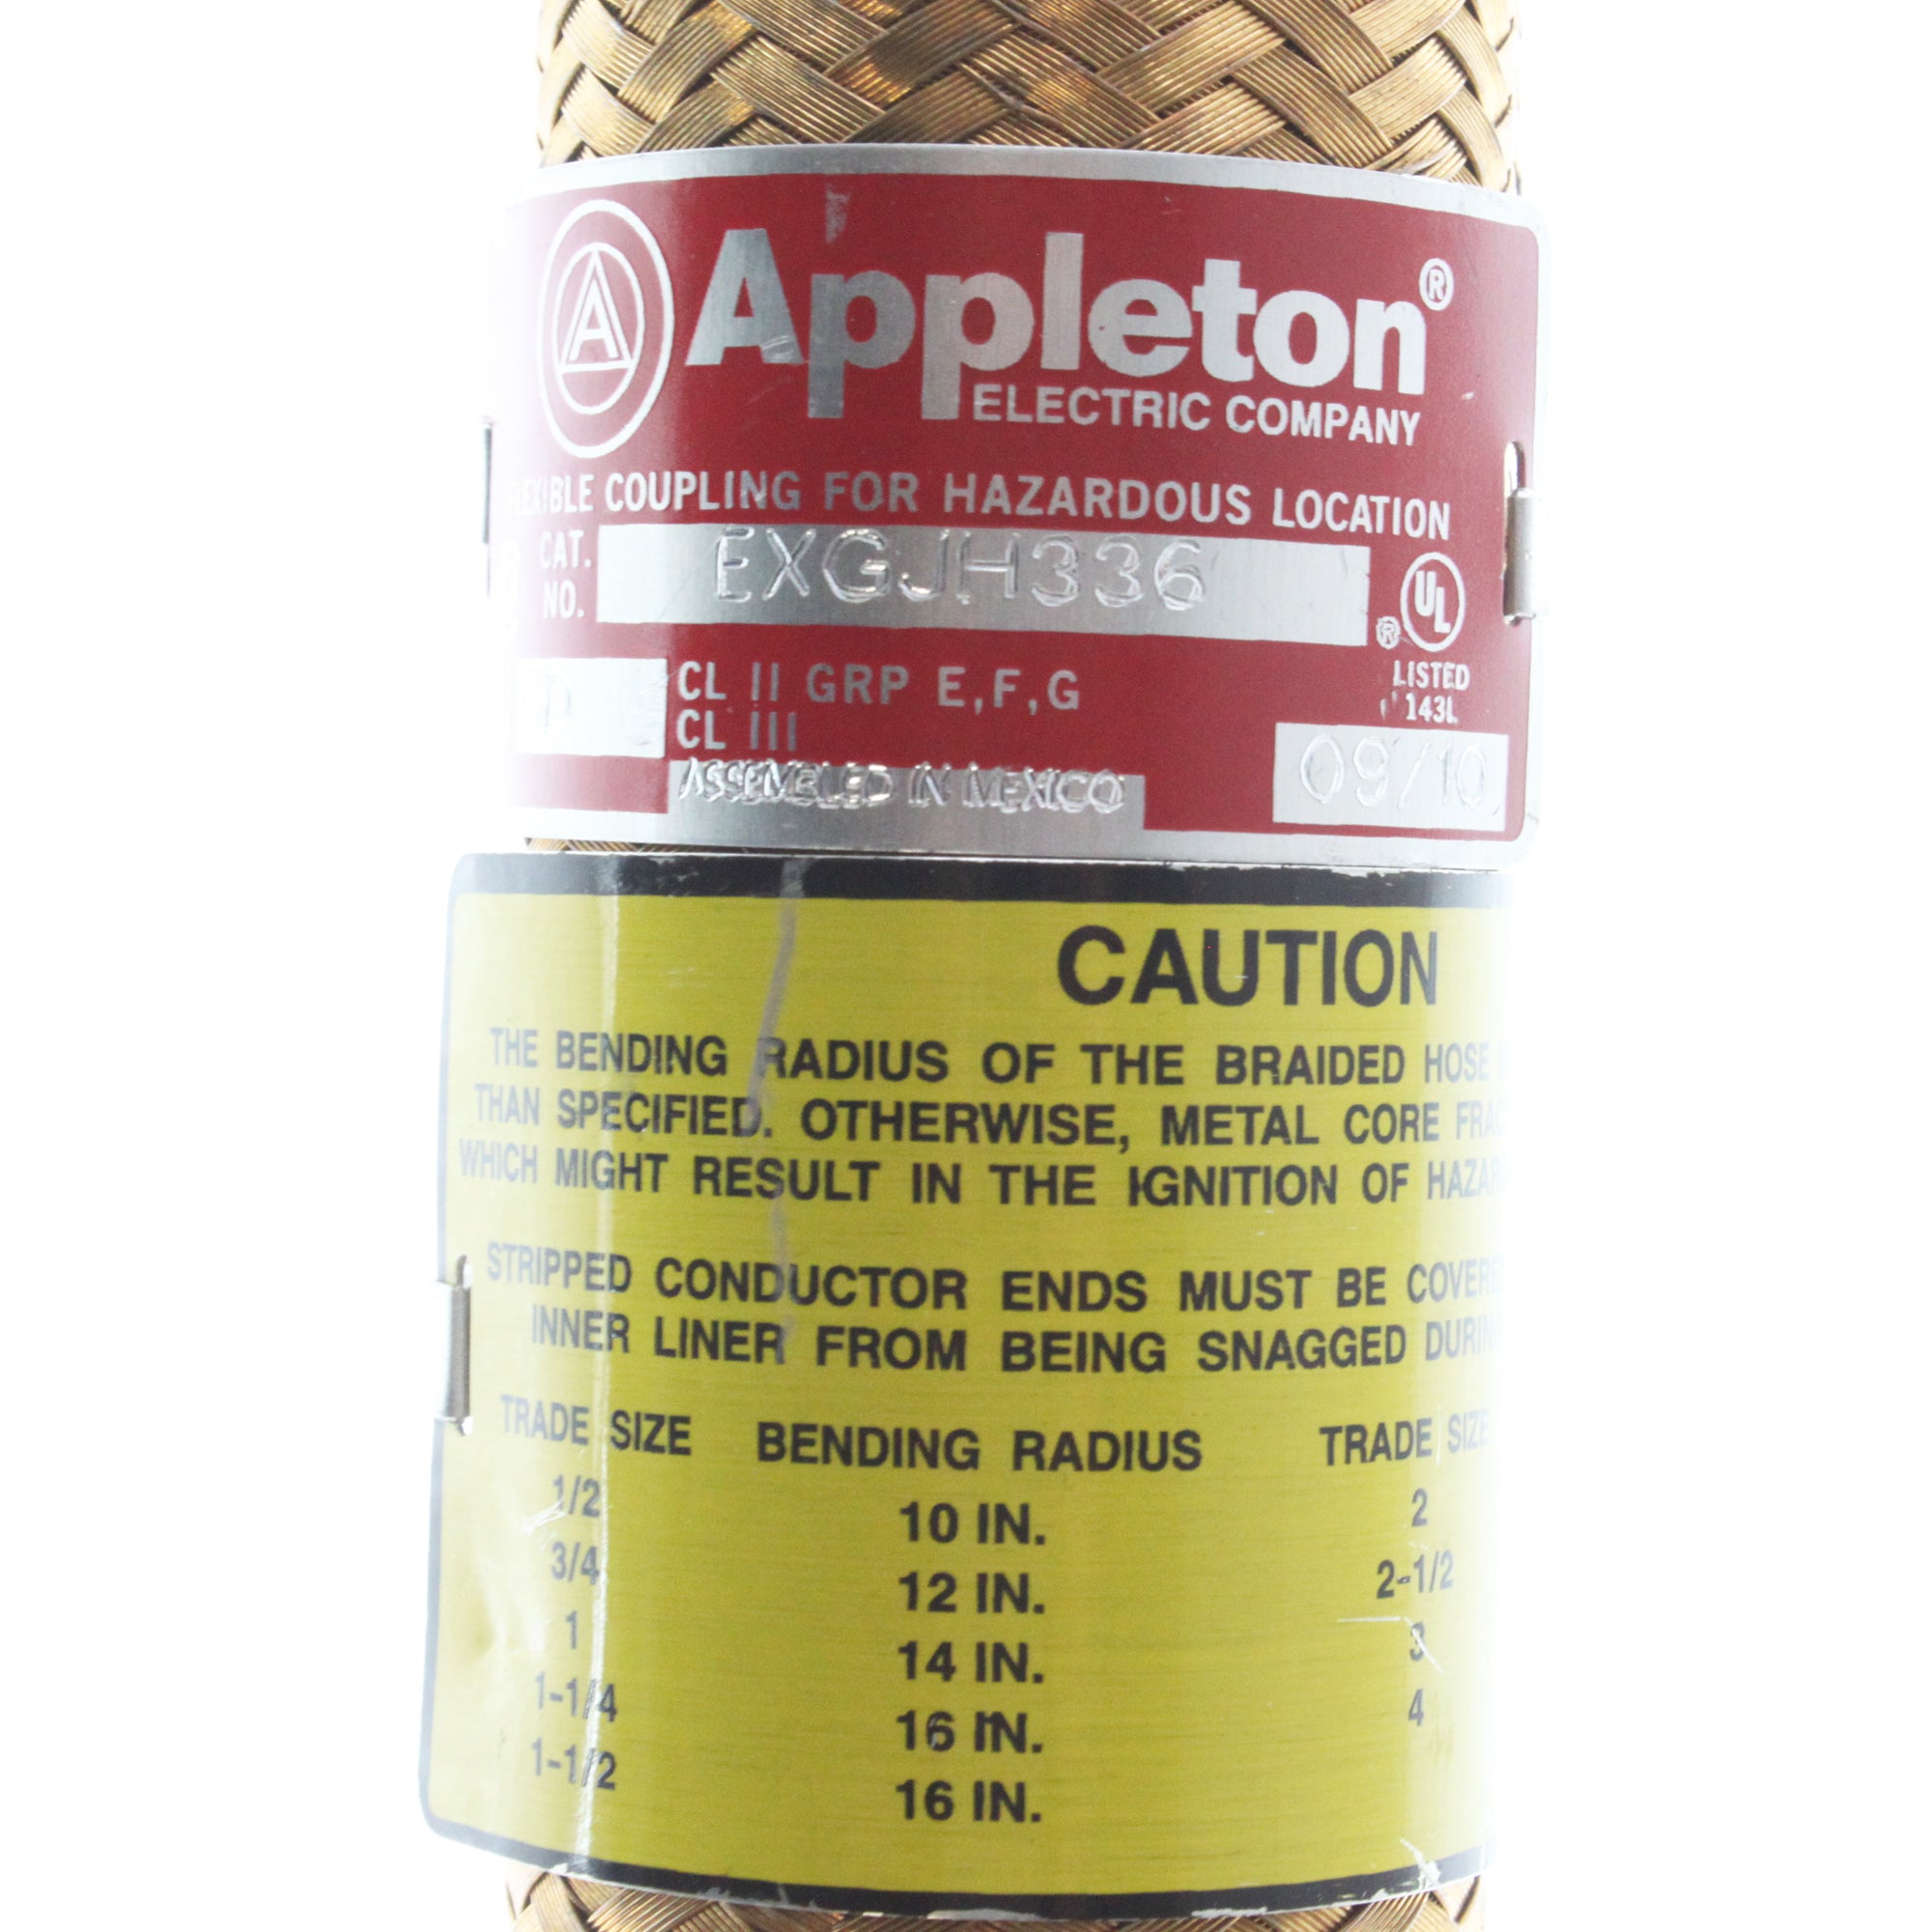 Appleton, APPLETON EXGJH336 EXPLOSION PROOF FLEXIBLE CONDUIT FITTING, 36" LENGTH, 1" HUBS